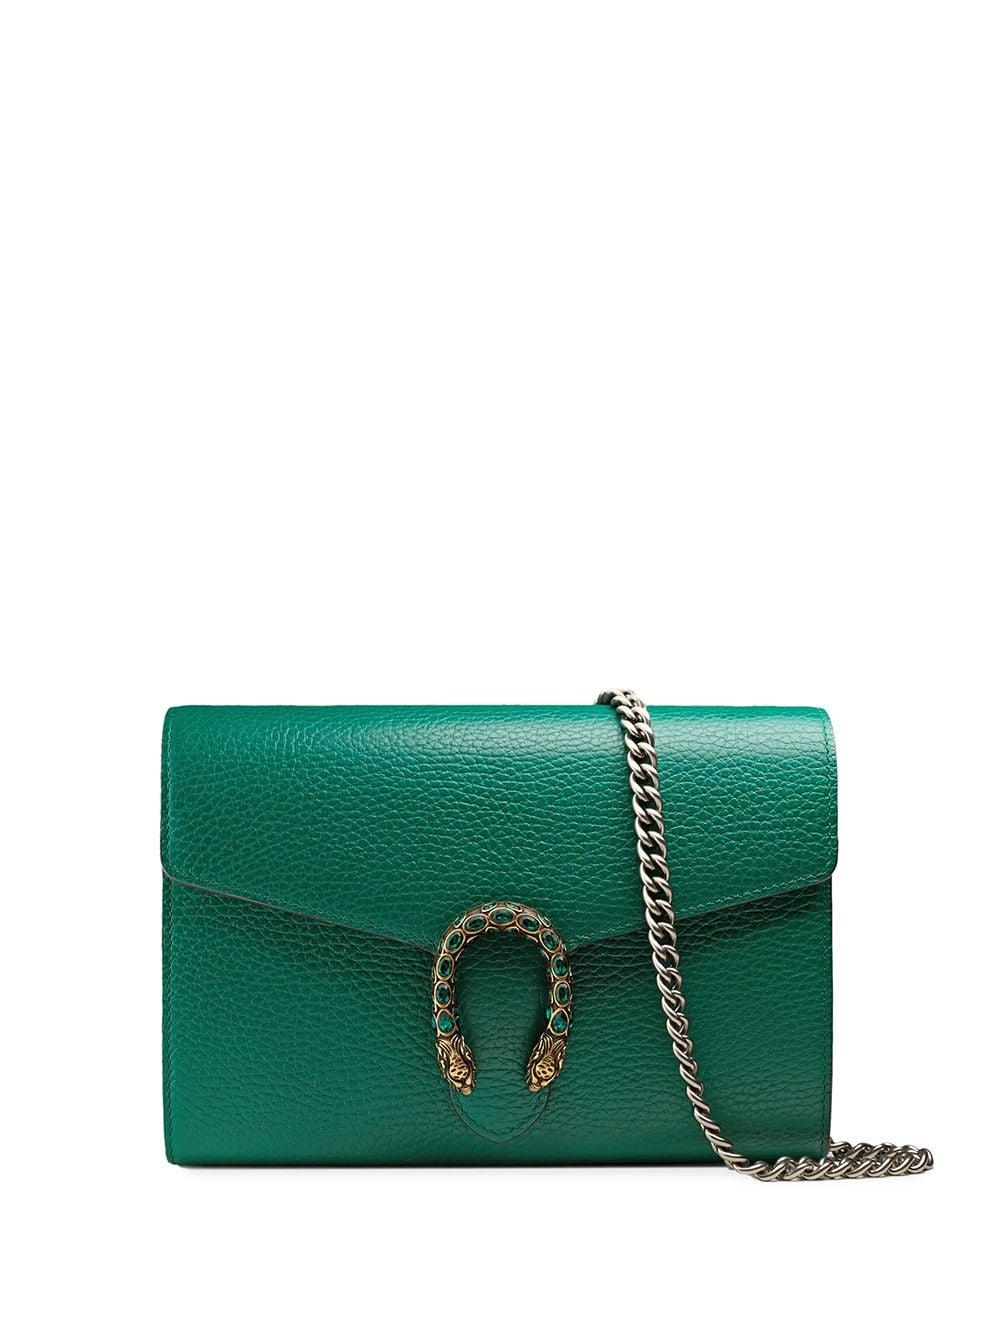 Gucci Mini Dionysus Leather Chain Bag in Green